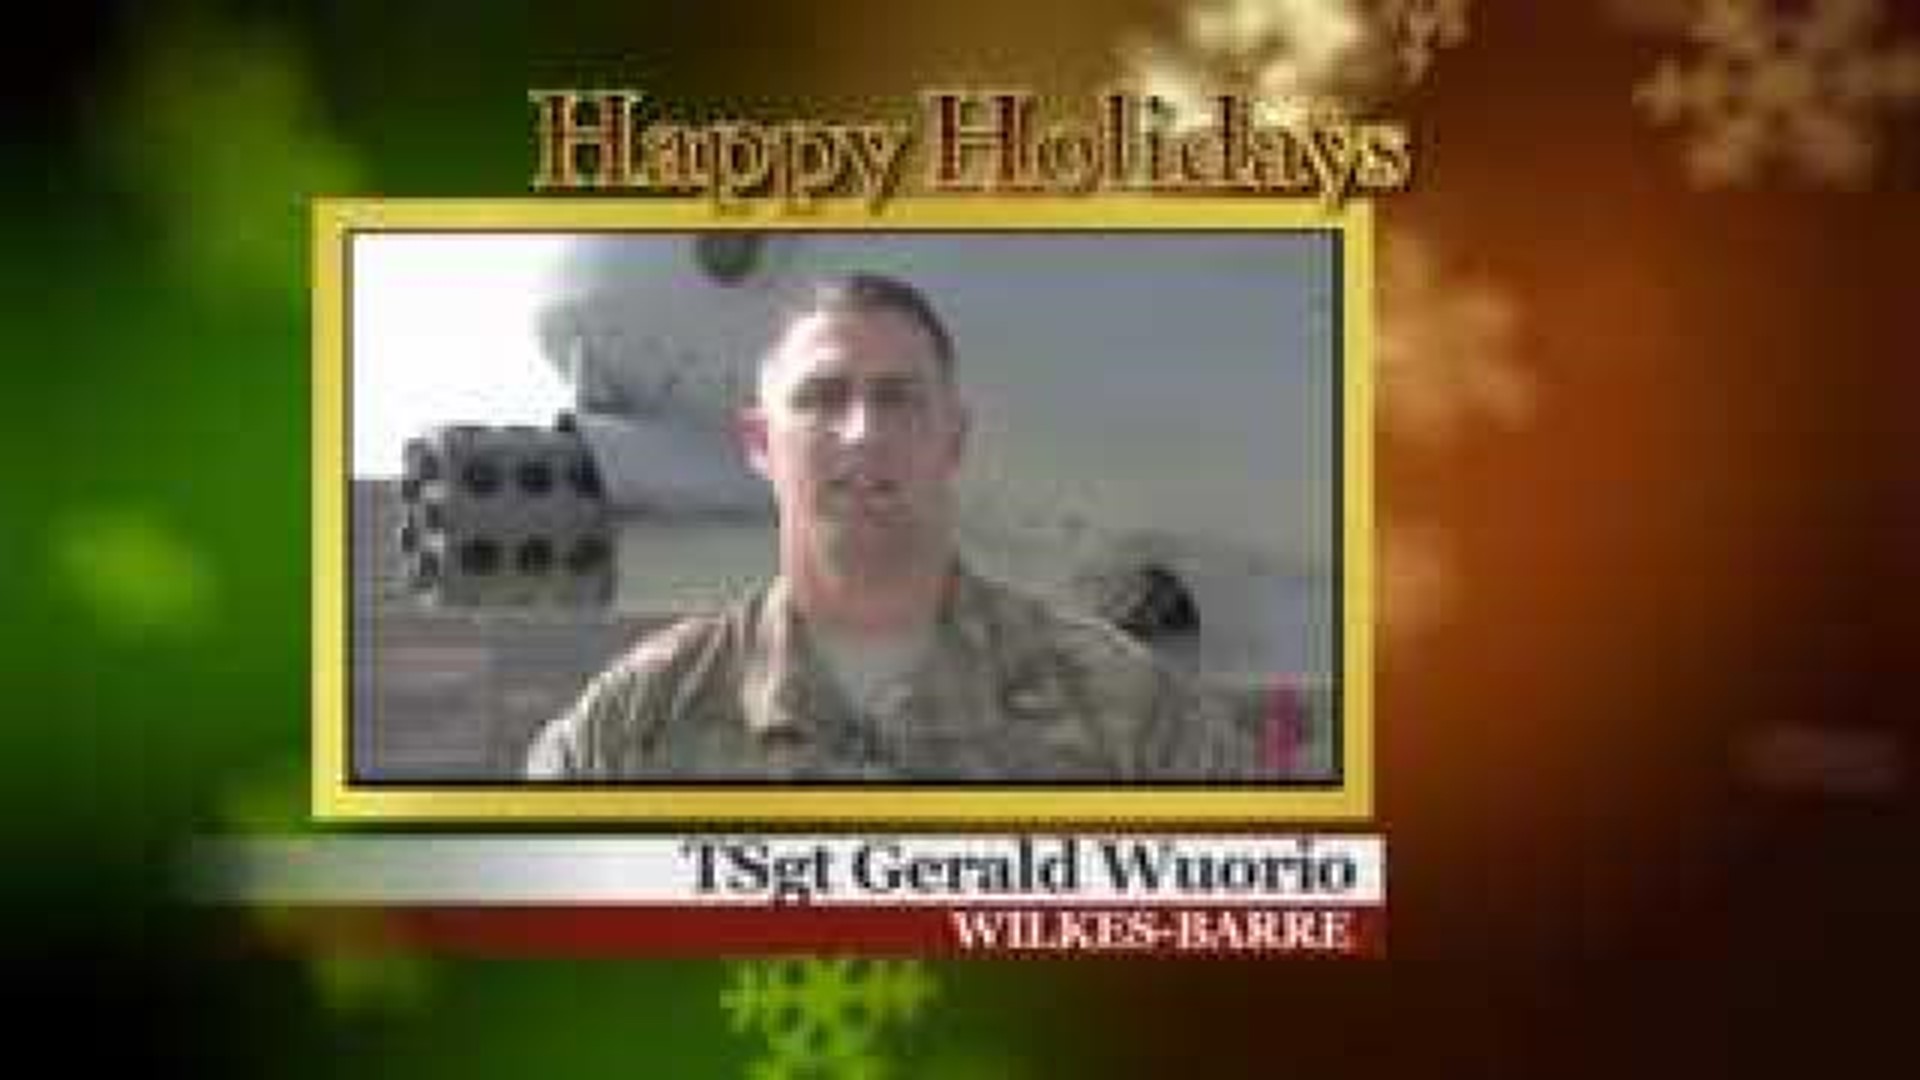 Military Greeting: TSgt Gerald Wuorio